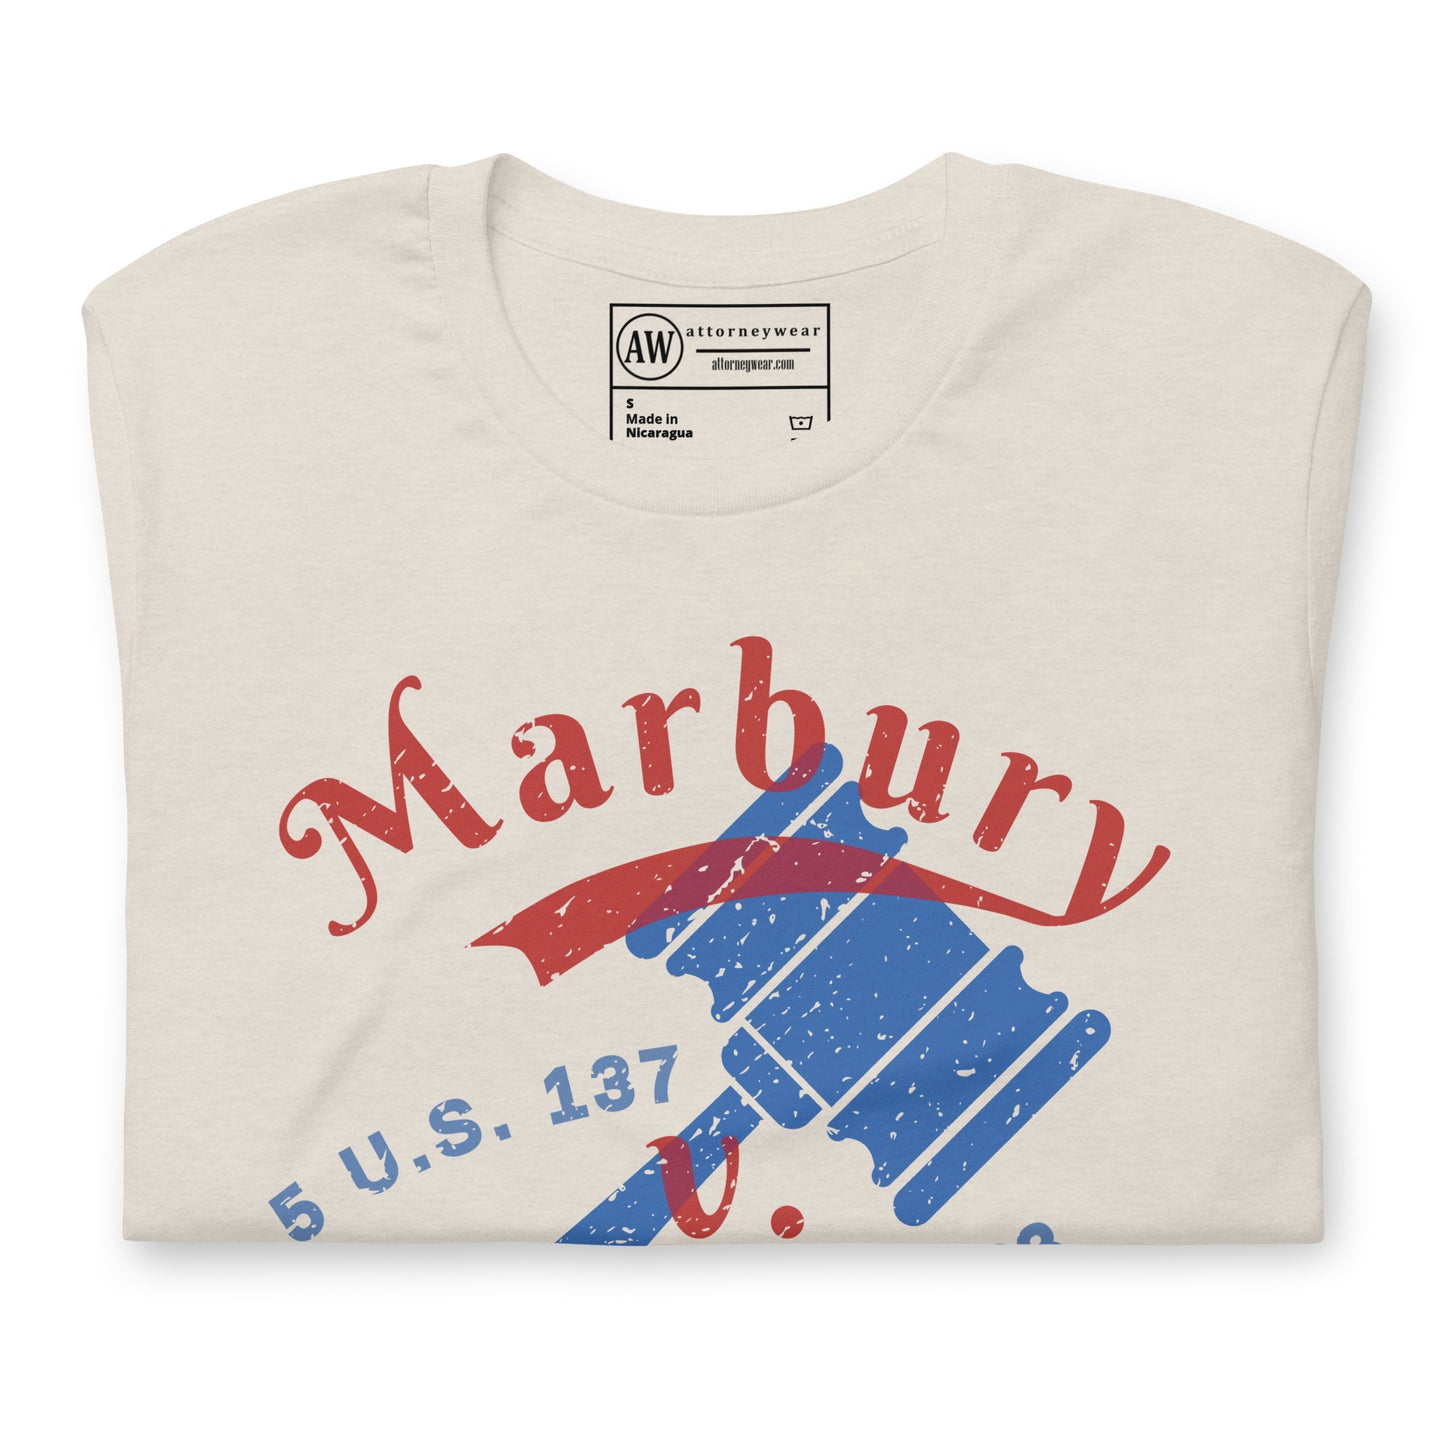 Marbury v. Madison shirt